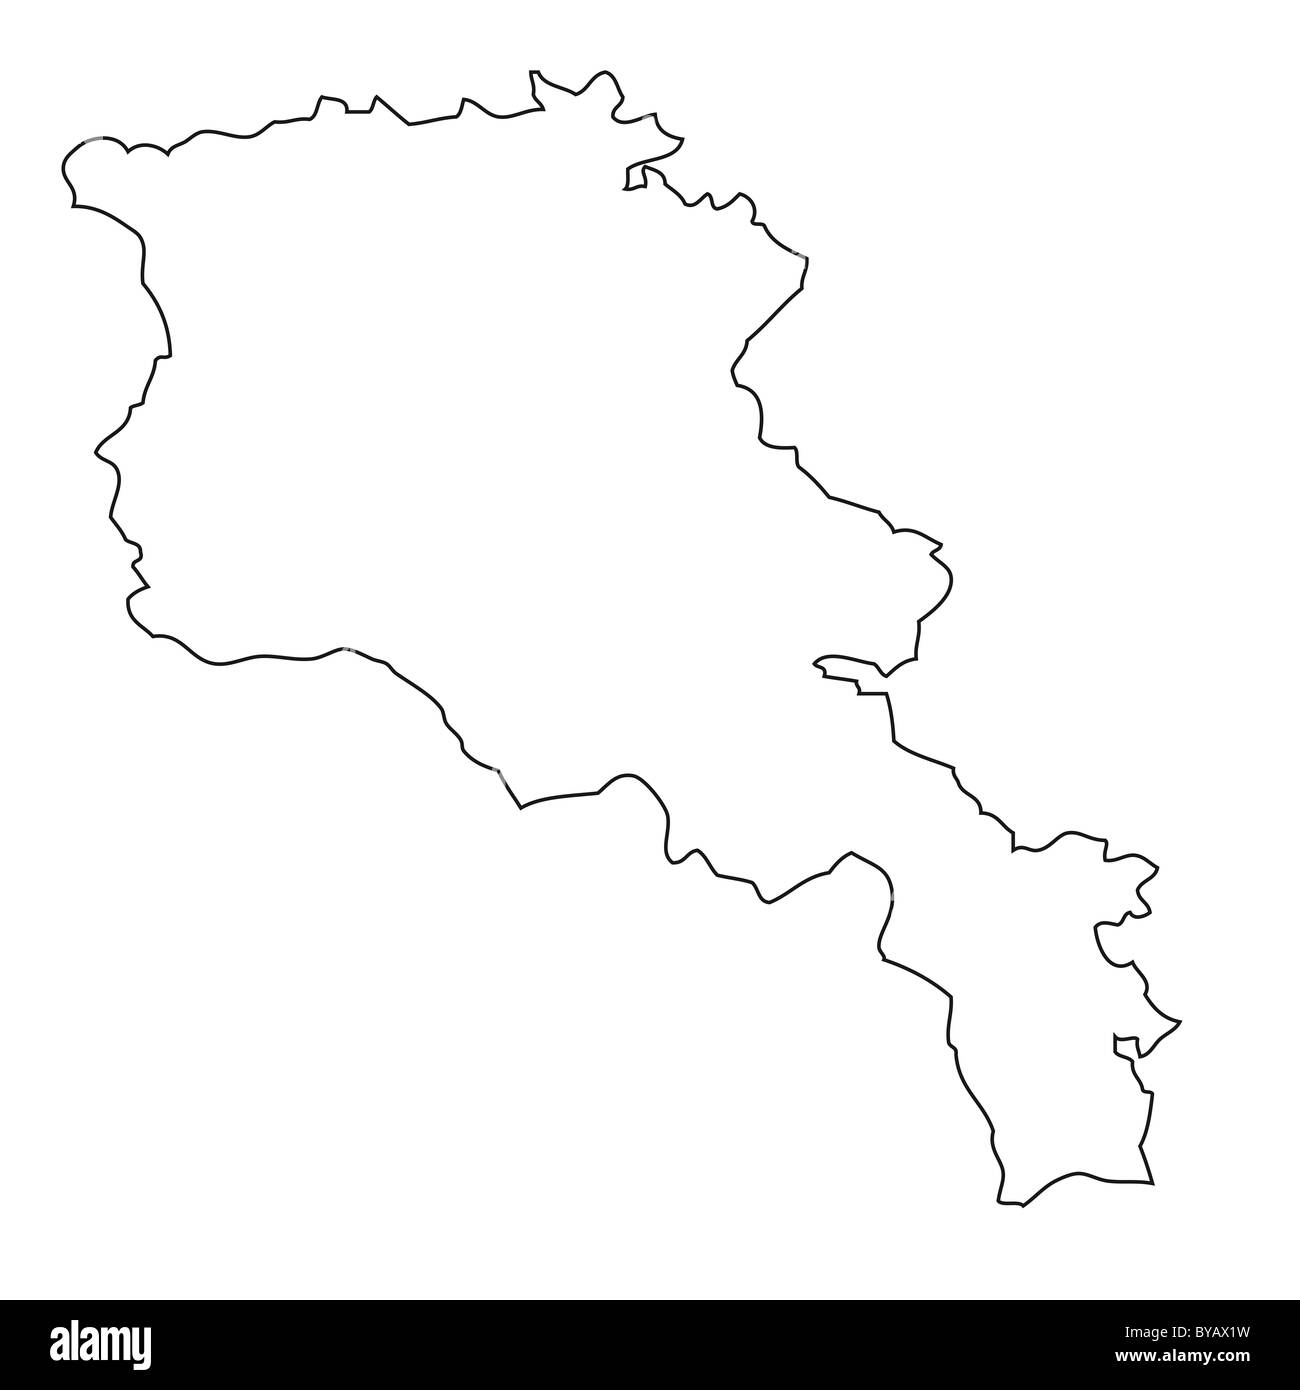 Outline, map of Armenia Stock Photo